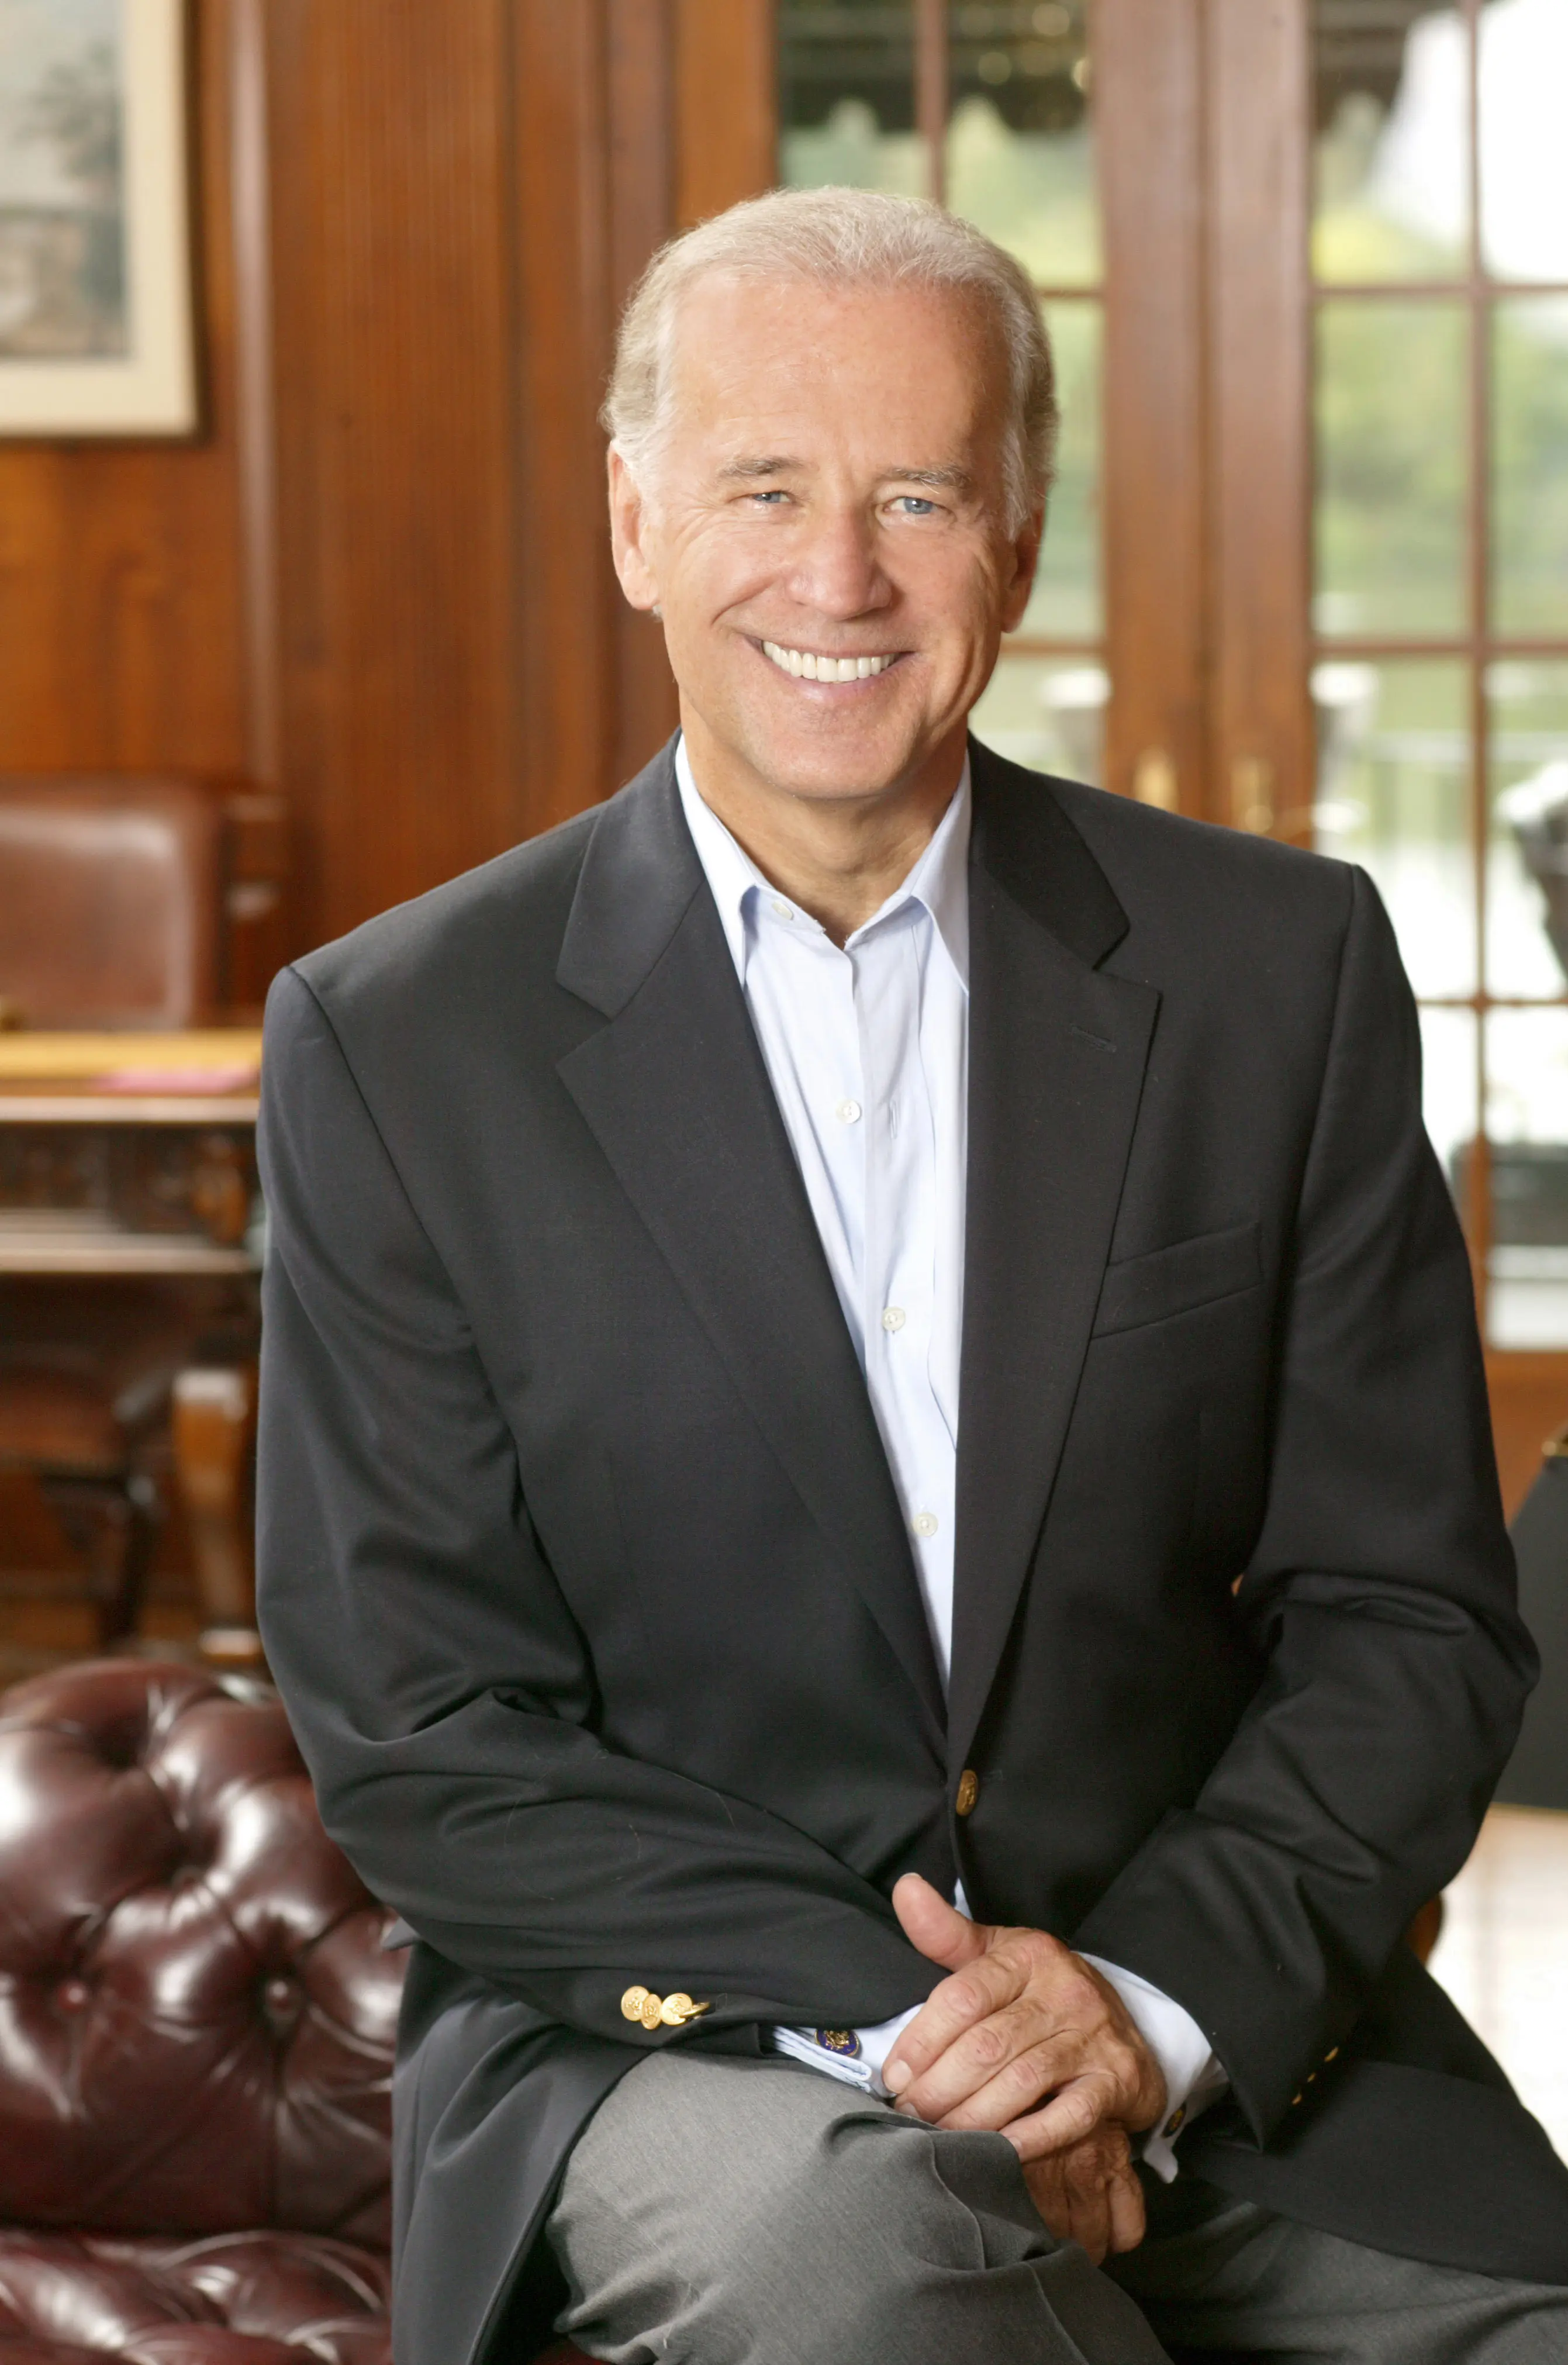 Joe_Biden,_official_photo_portrait_2.jpg